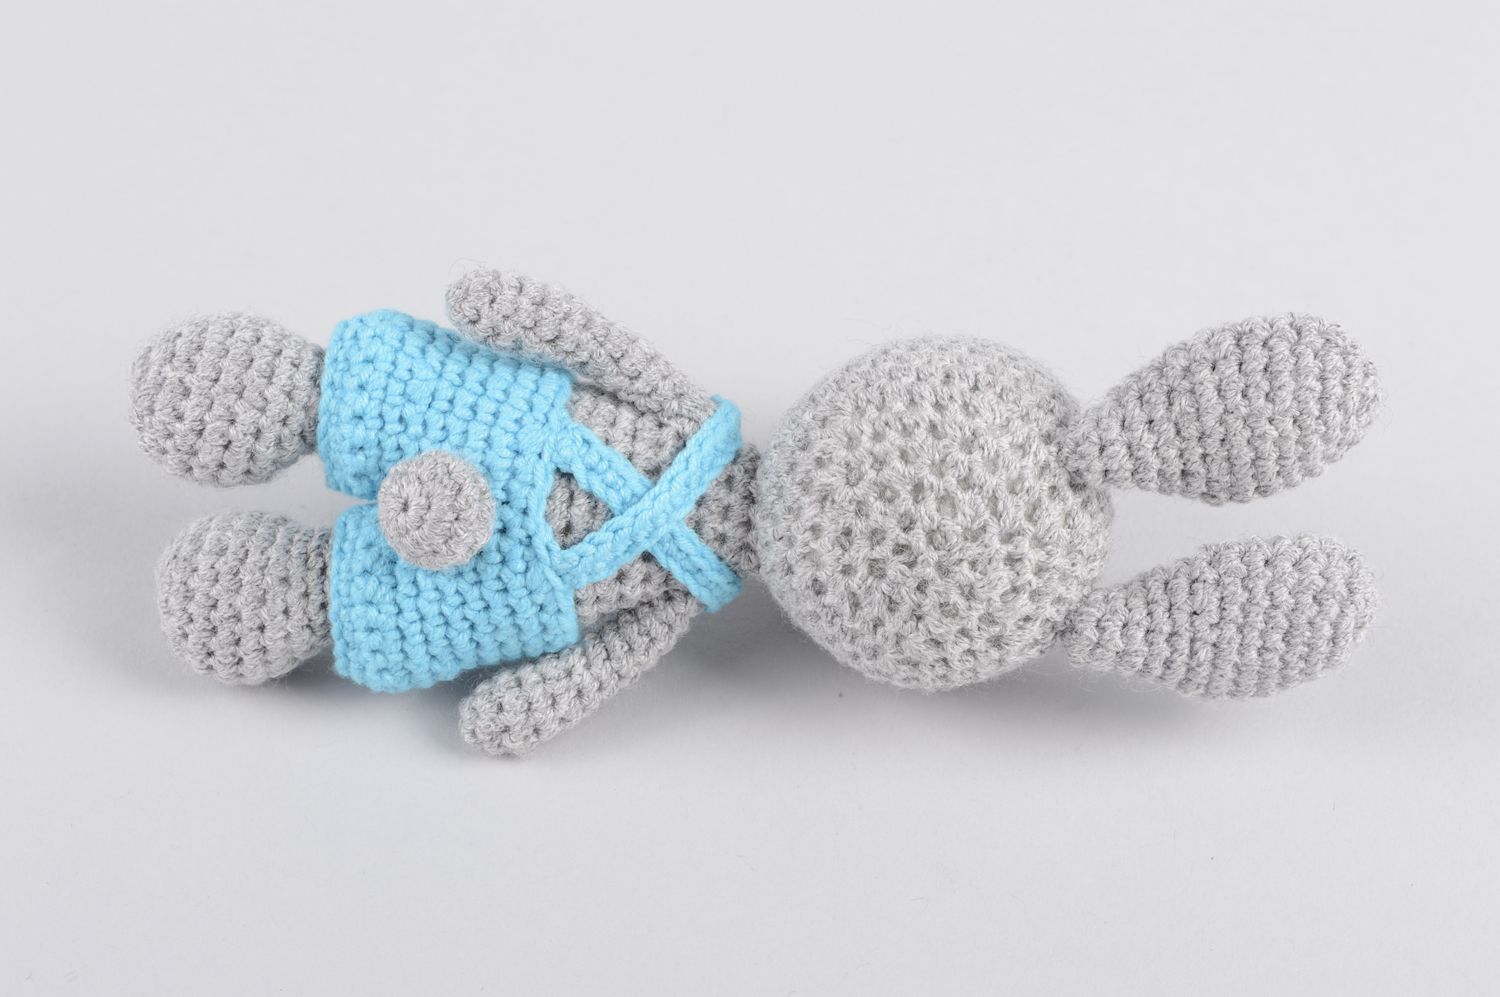 Beautiful handmade soft toy unusual crochet toy for kids birthday gift ideas photo 2